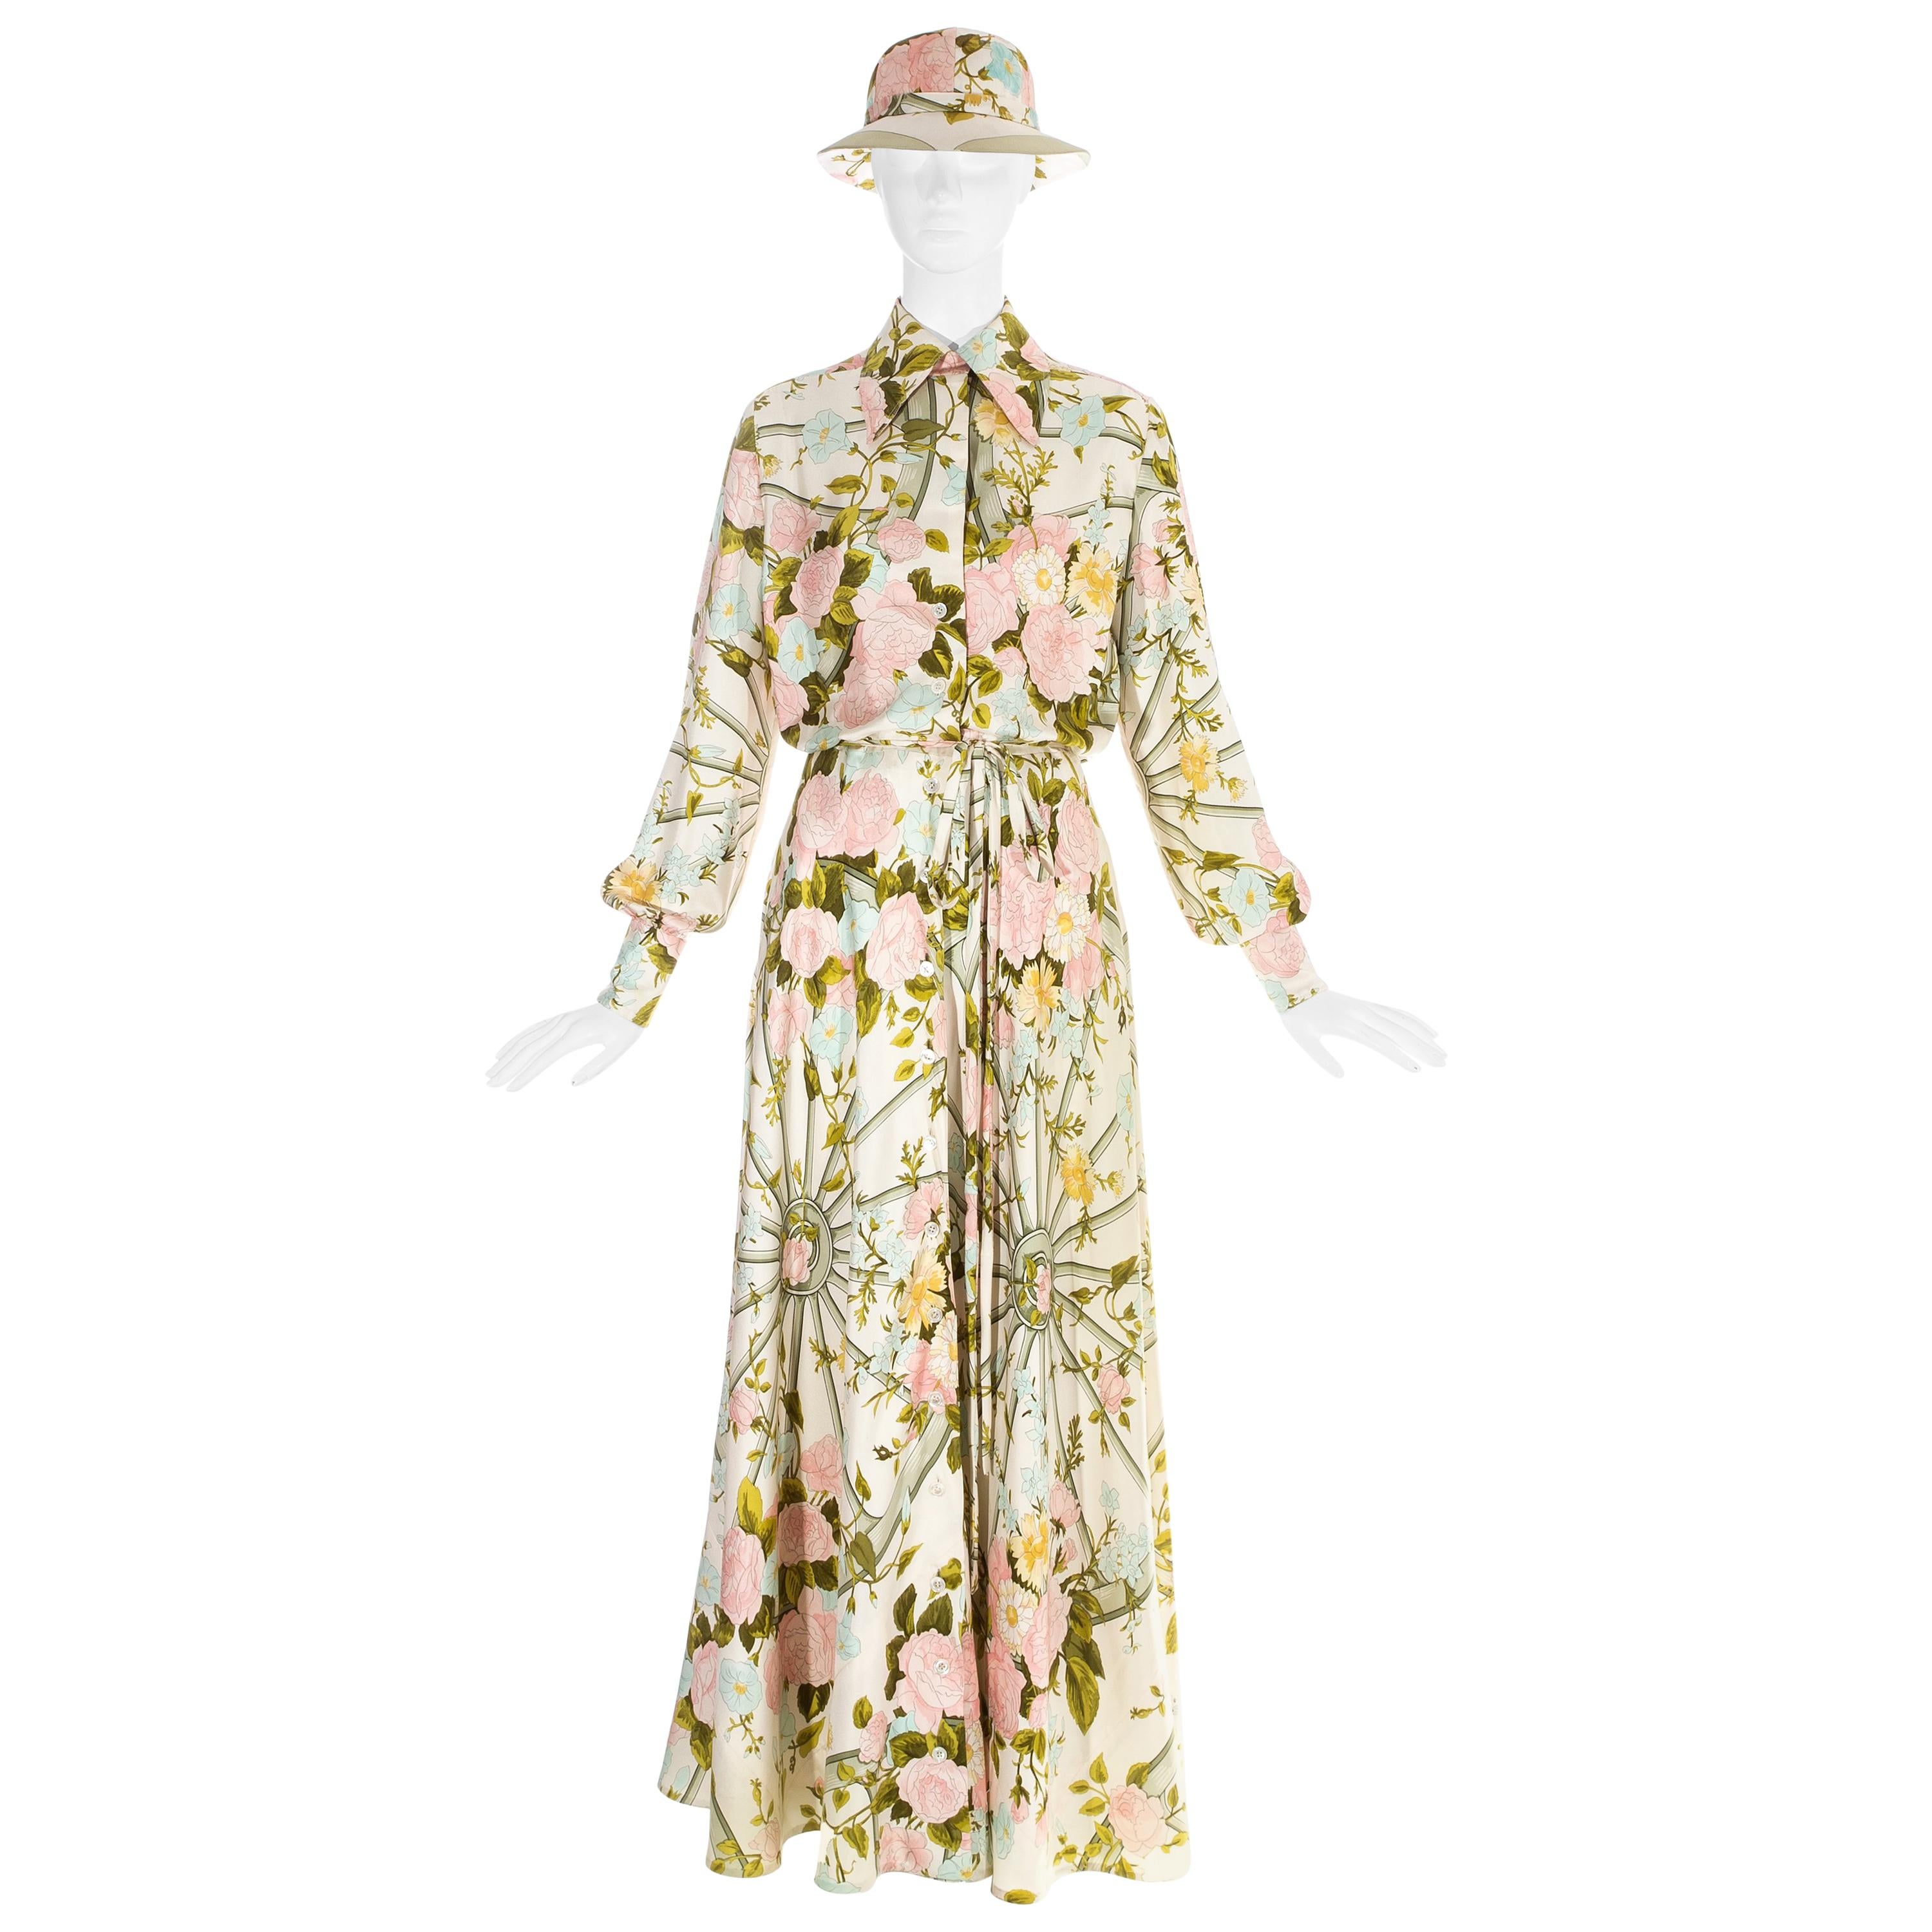 Hermes silk floral maxi shirt dress with matching sunhat, c. 1970s